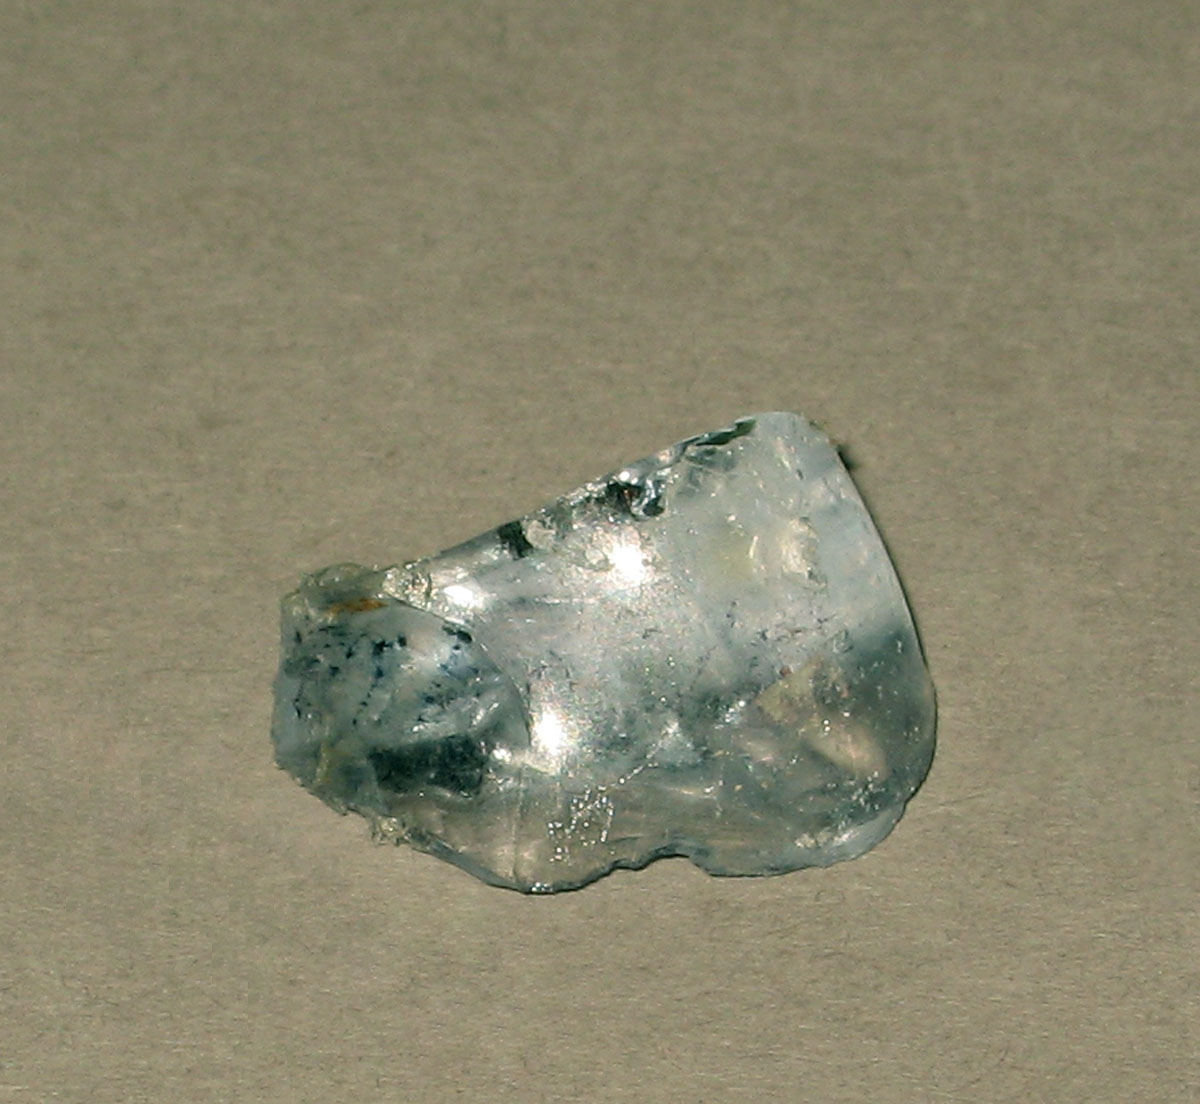 1971.0024.012 Glass fragment